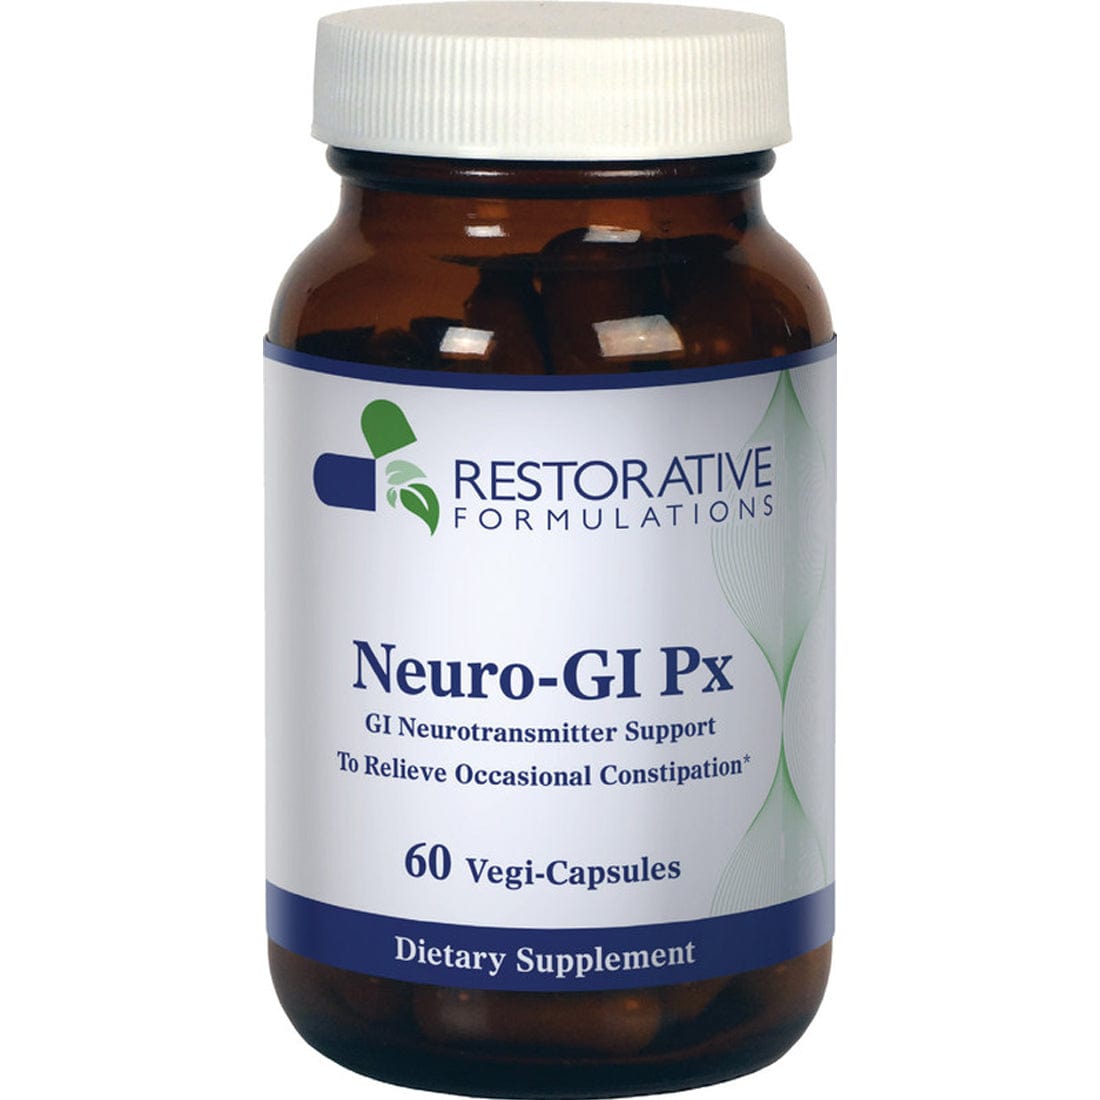 Restorative Formulations Neuro-GI Px, 60 Vegi-Capsules